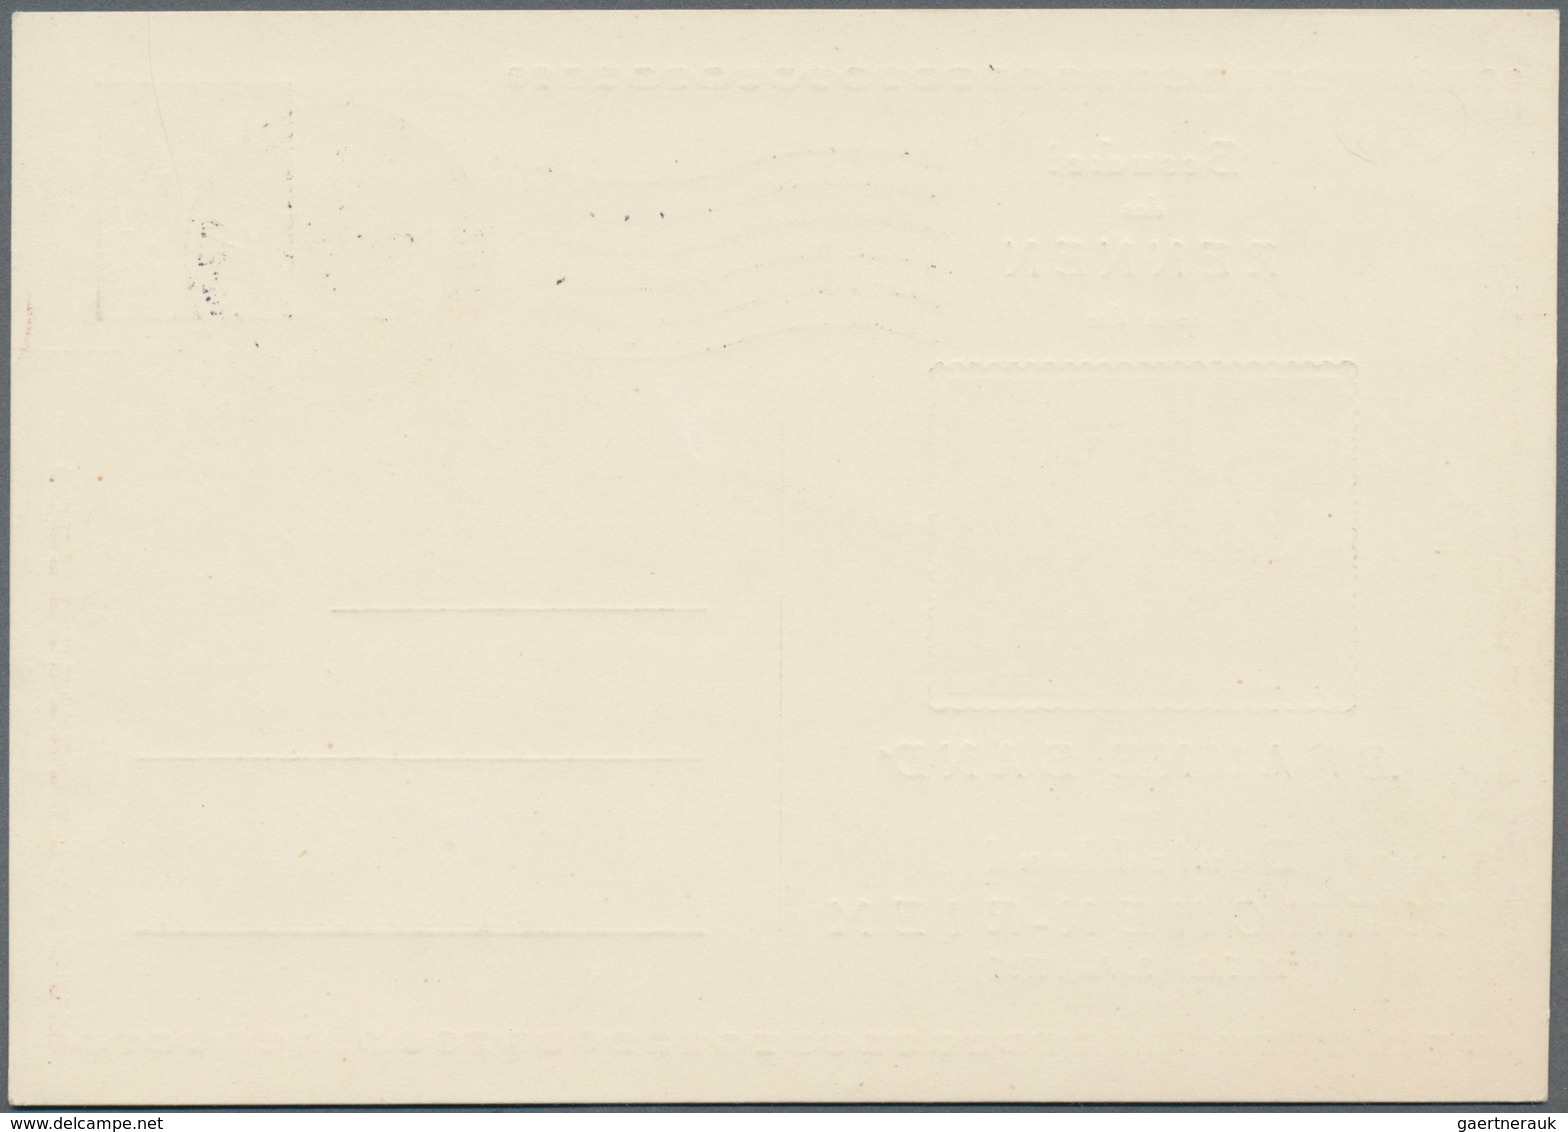 Thematik: Tiere-Pferde / Animals-horses: 1937, German Reich. Private Postal Card 5 Pf Airmail "Visit - Pferde